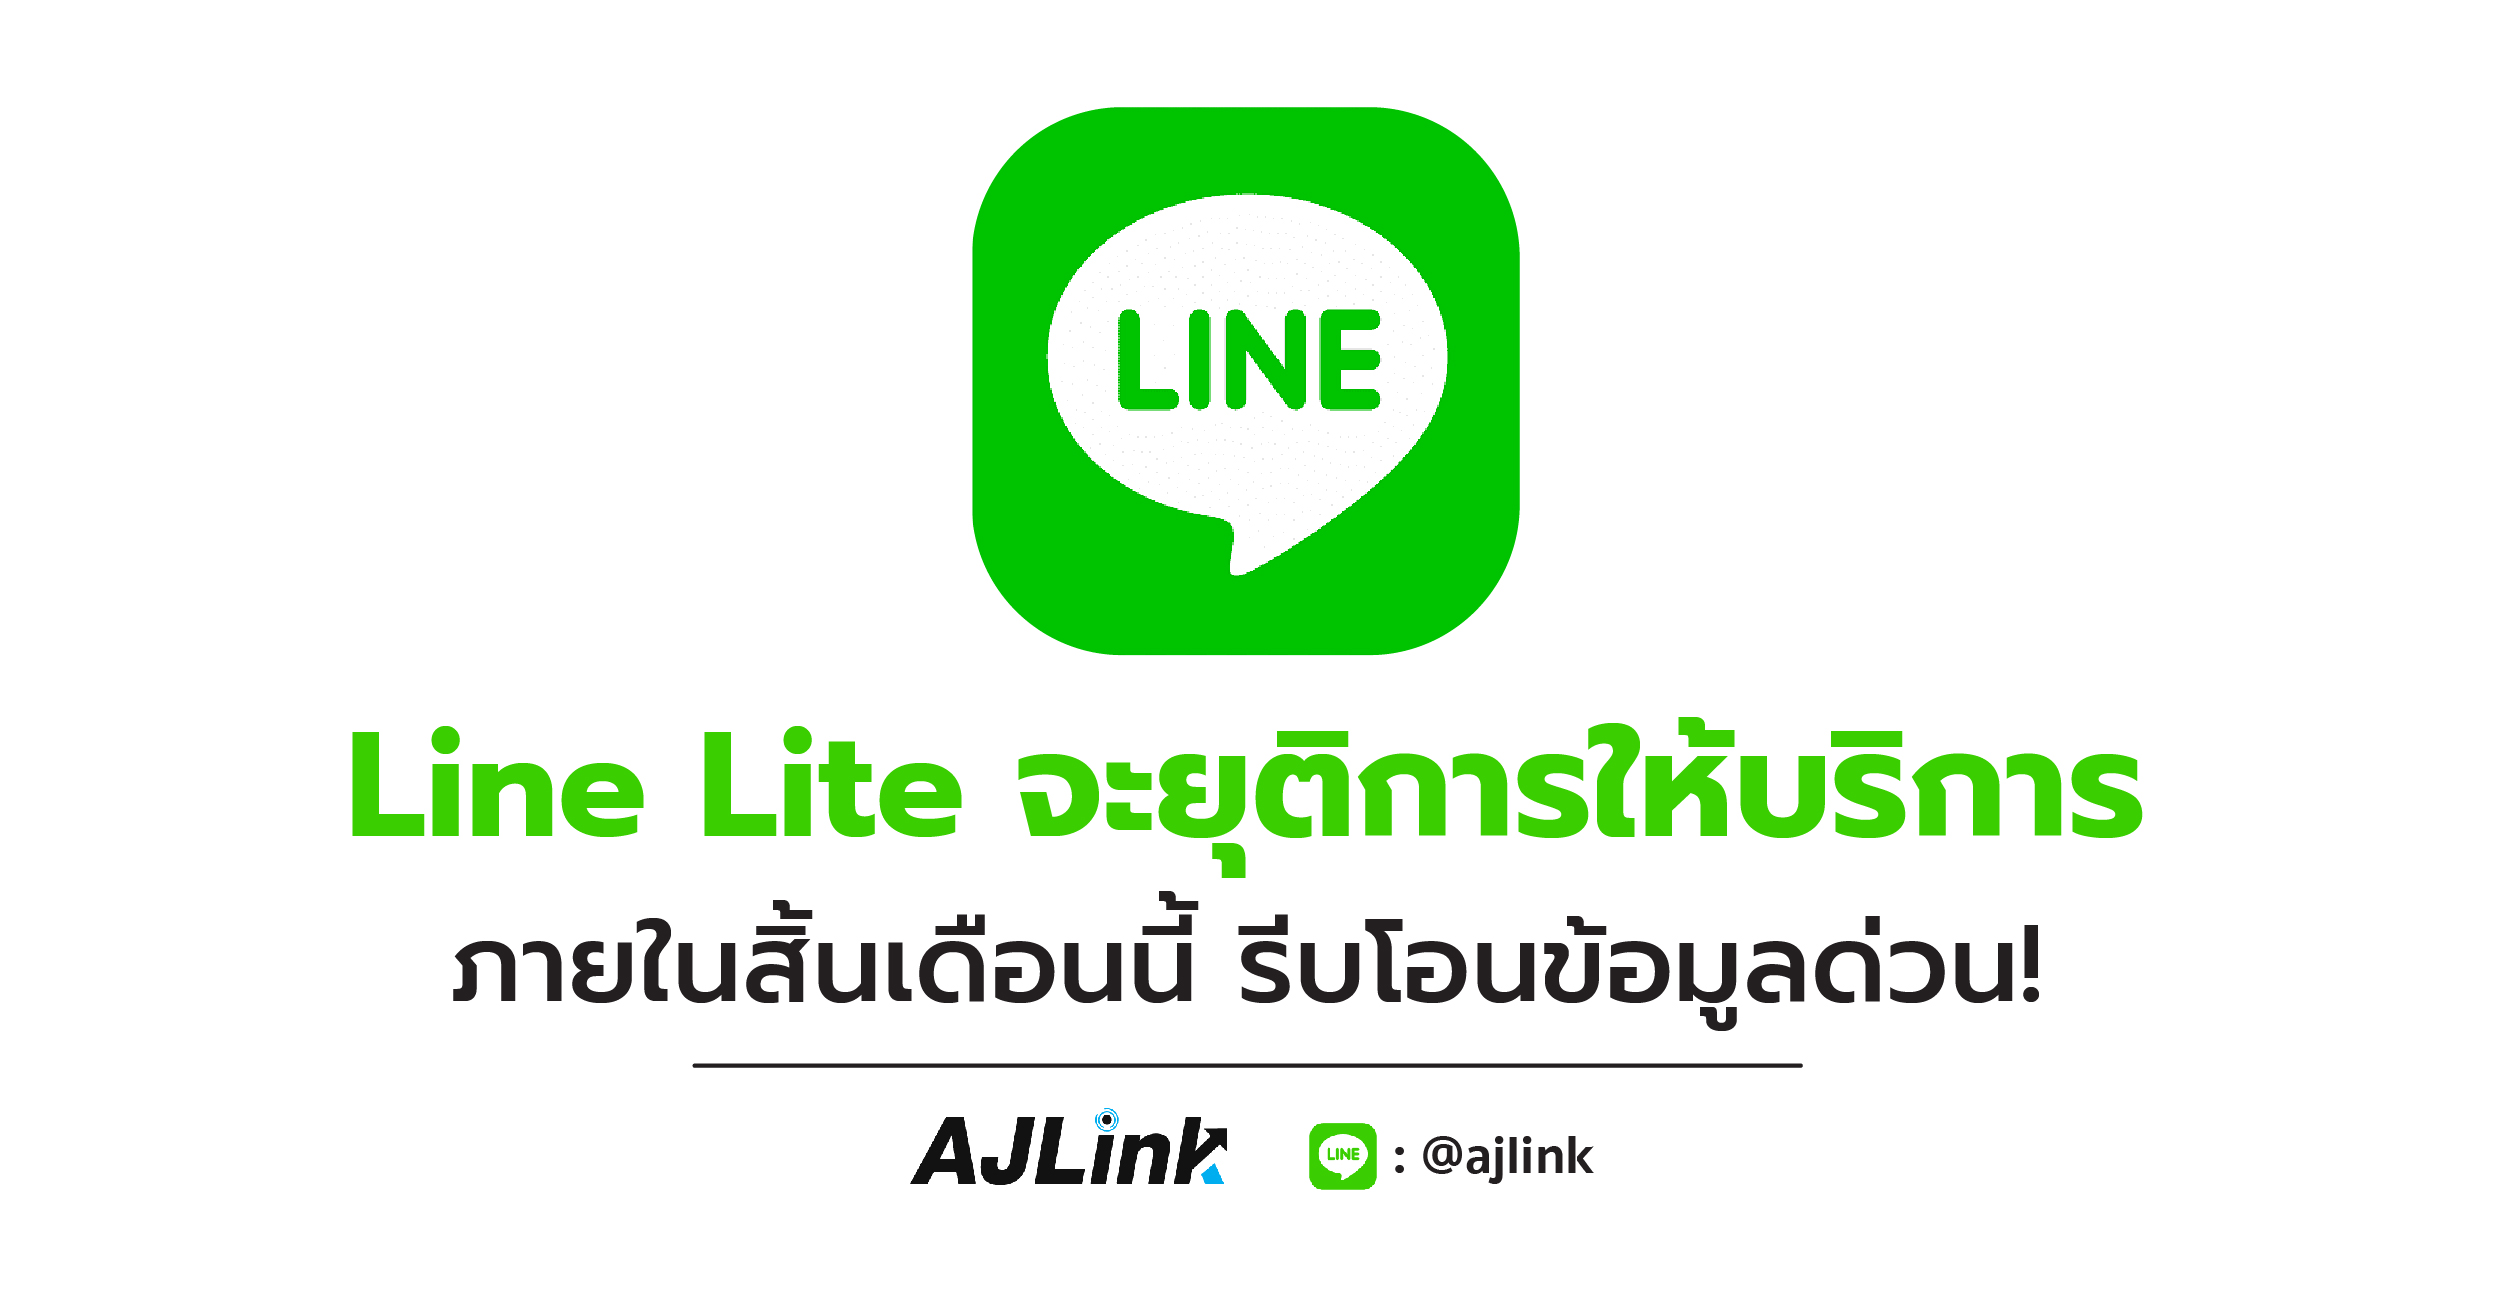 Line, Line Feature, Line Official Account, Line OA, Line Lite, Line Update, Line Lite จะยุติการให้บริการภายในสิ้นเดือนนี้ รีบโอนข้อมูลด่วน!